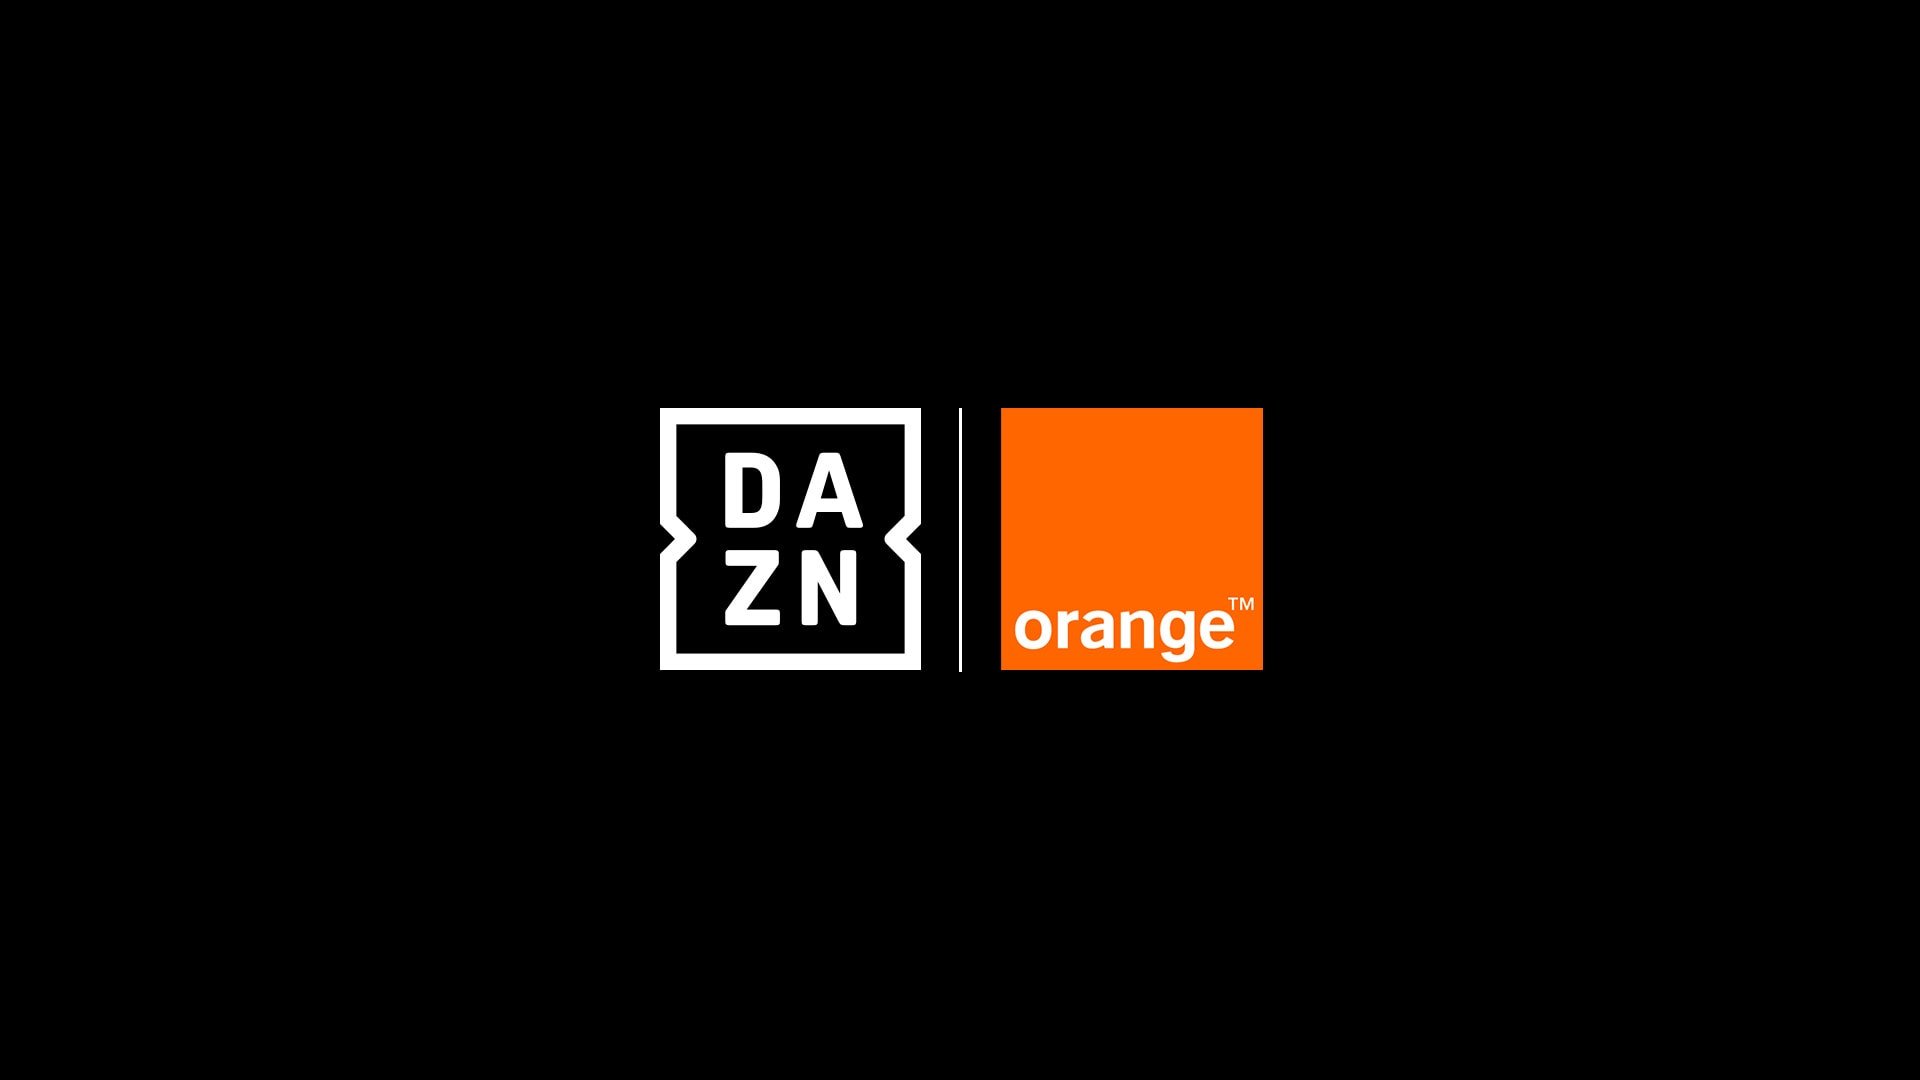 Orange DAZN